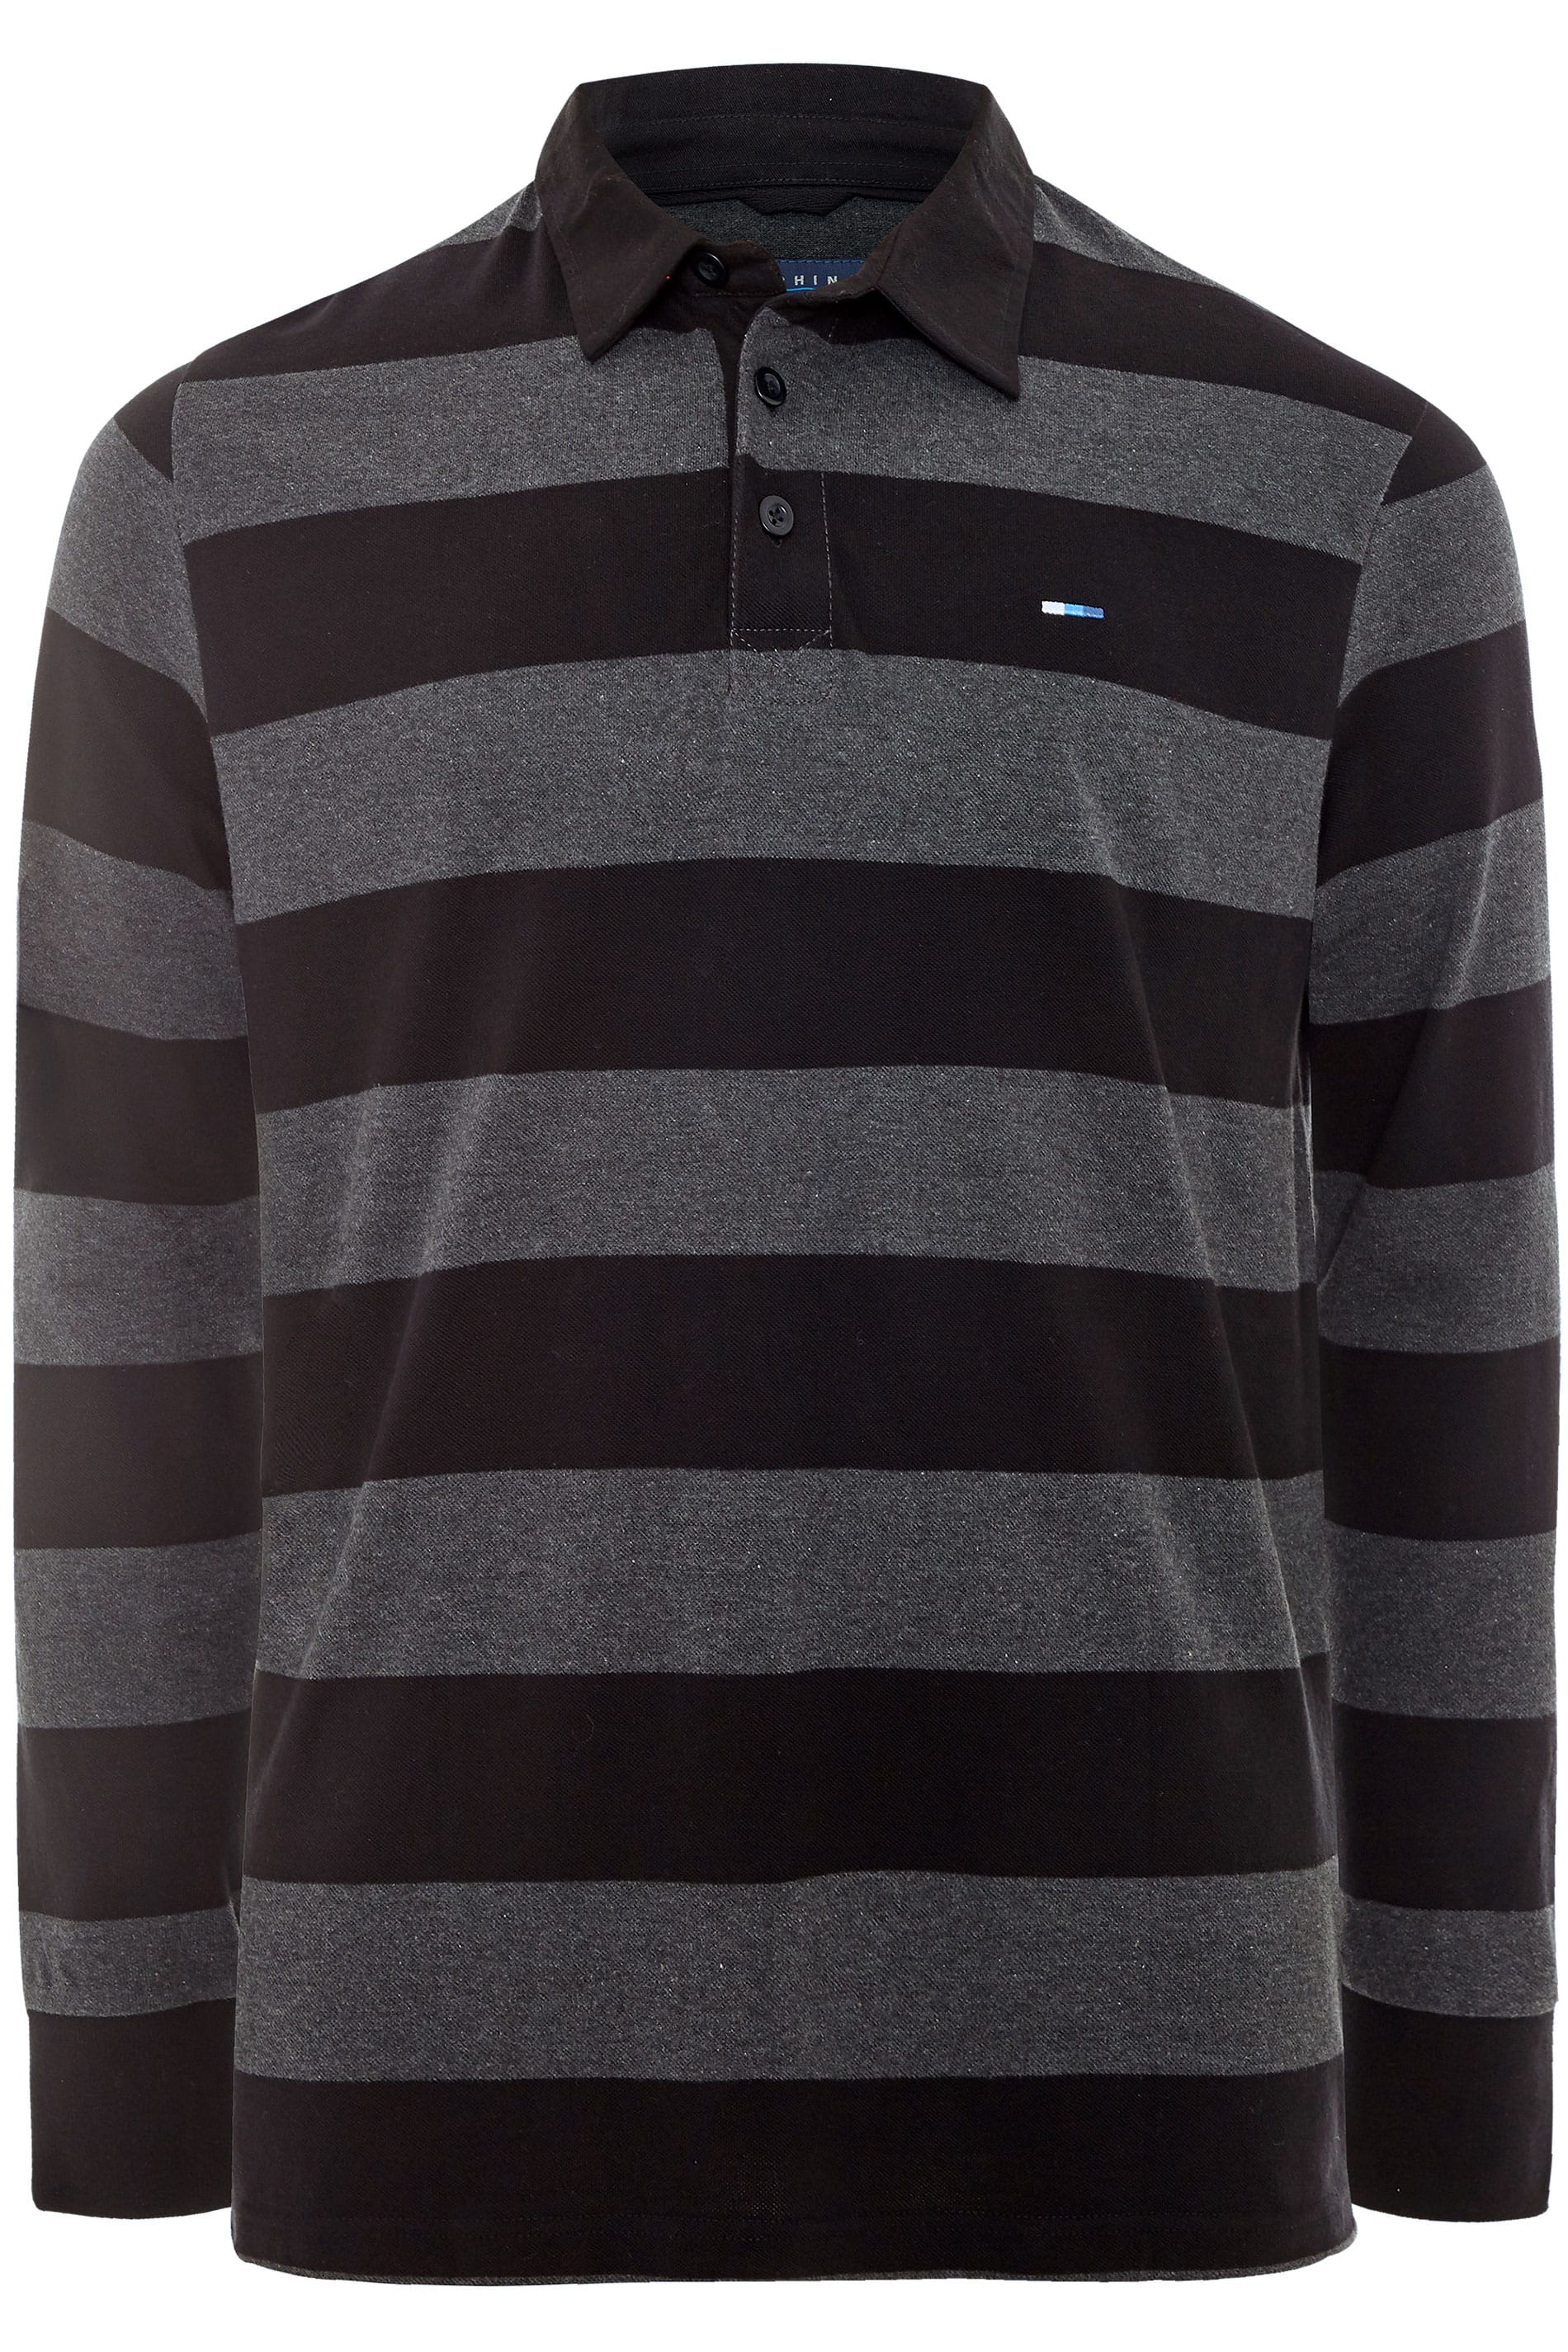 BadRhino Big & Tall Black and Grey Stripe Polo Shirt 1